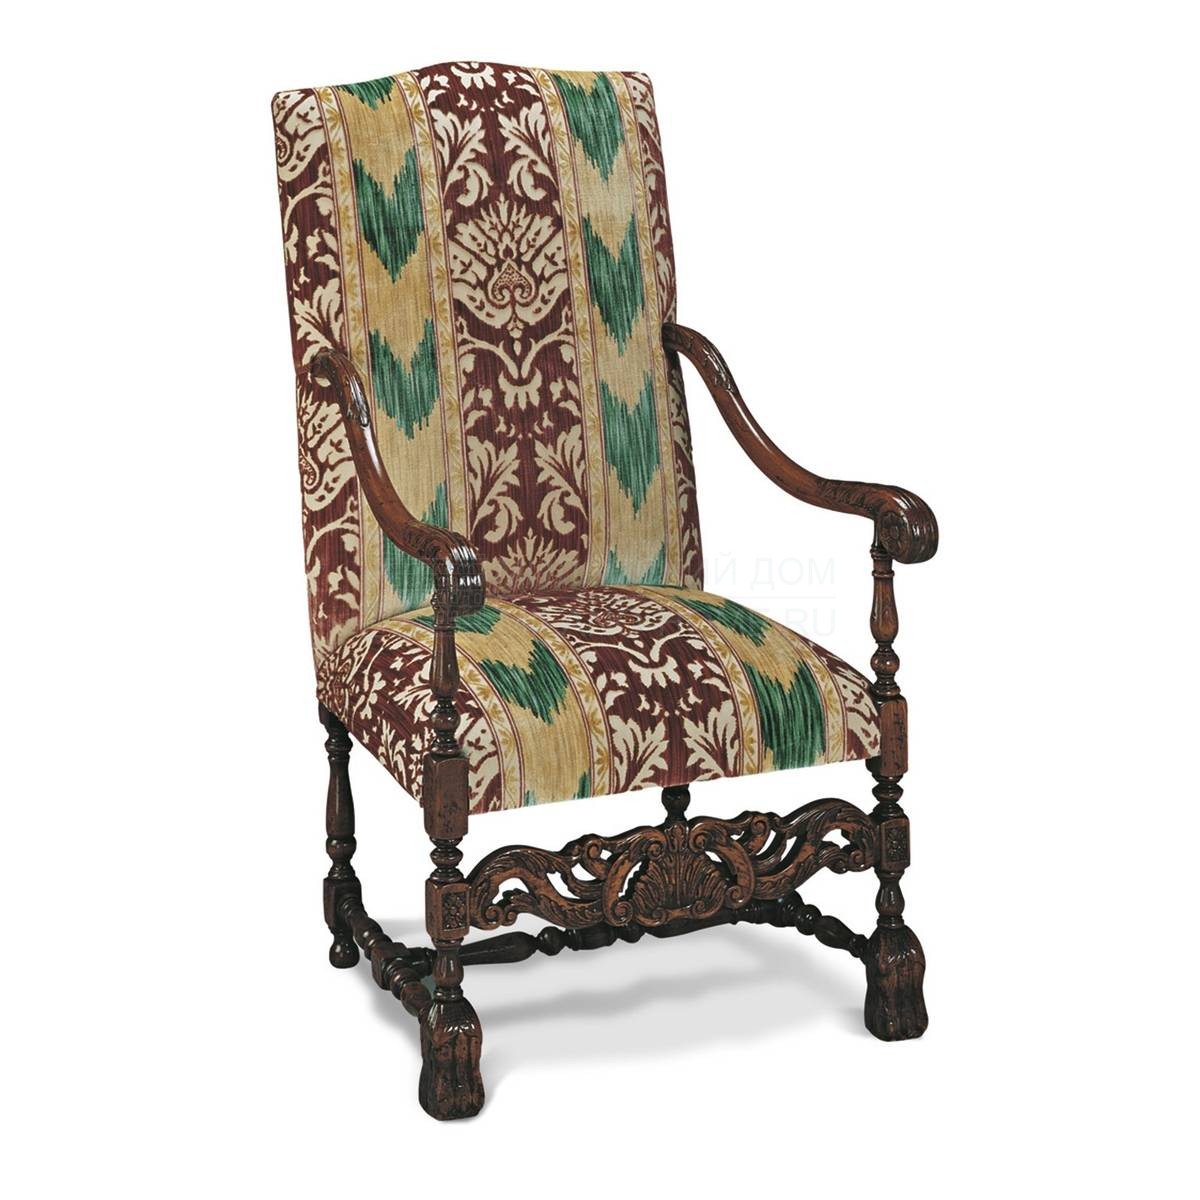 Кресло The Upholstery/P127 из Италии фабрики FRANCESCO MOLON